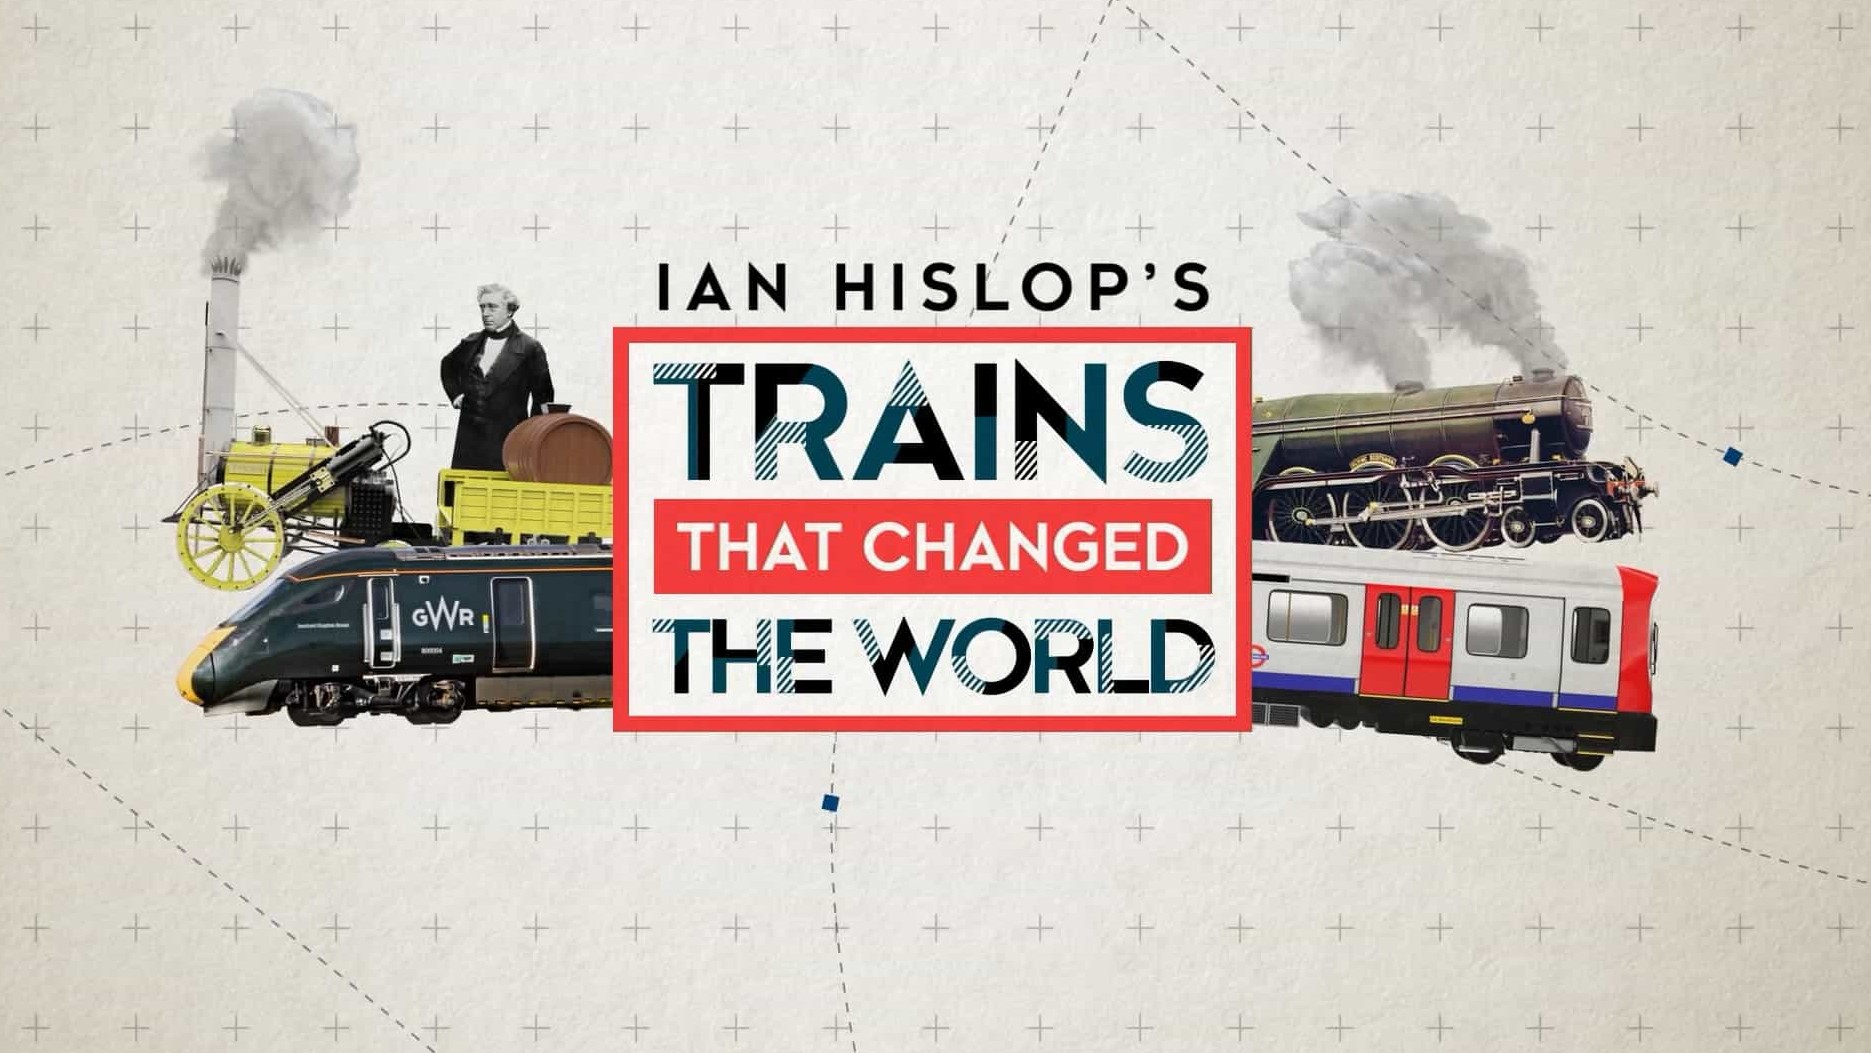 Ch5纪录片《改变世界的火车/伊安·西斯洛普：改变世界的火车 Ian Hislop: Trains That Changed the World 2021》第1季全4集 英语中英双字 1080P高清网盘下载